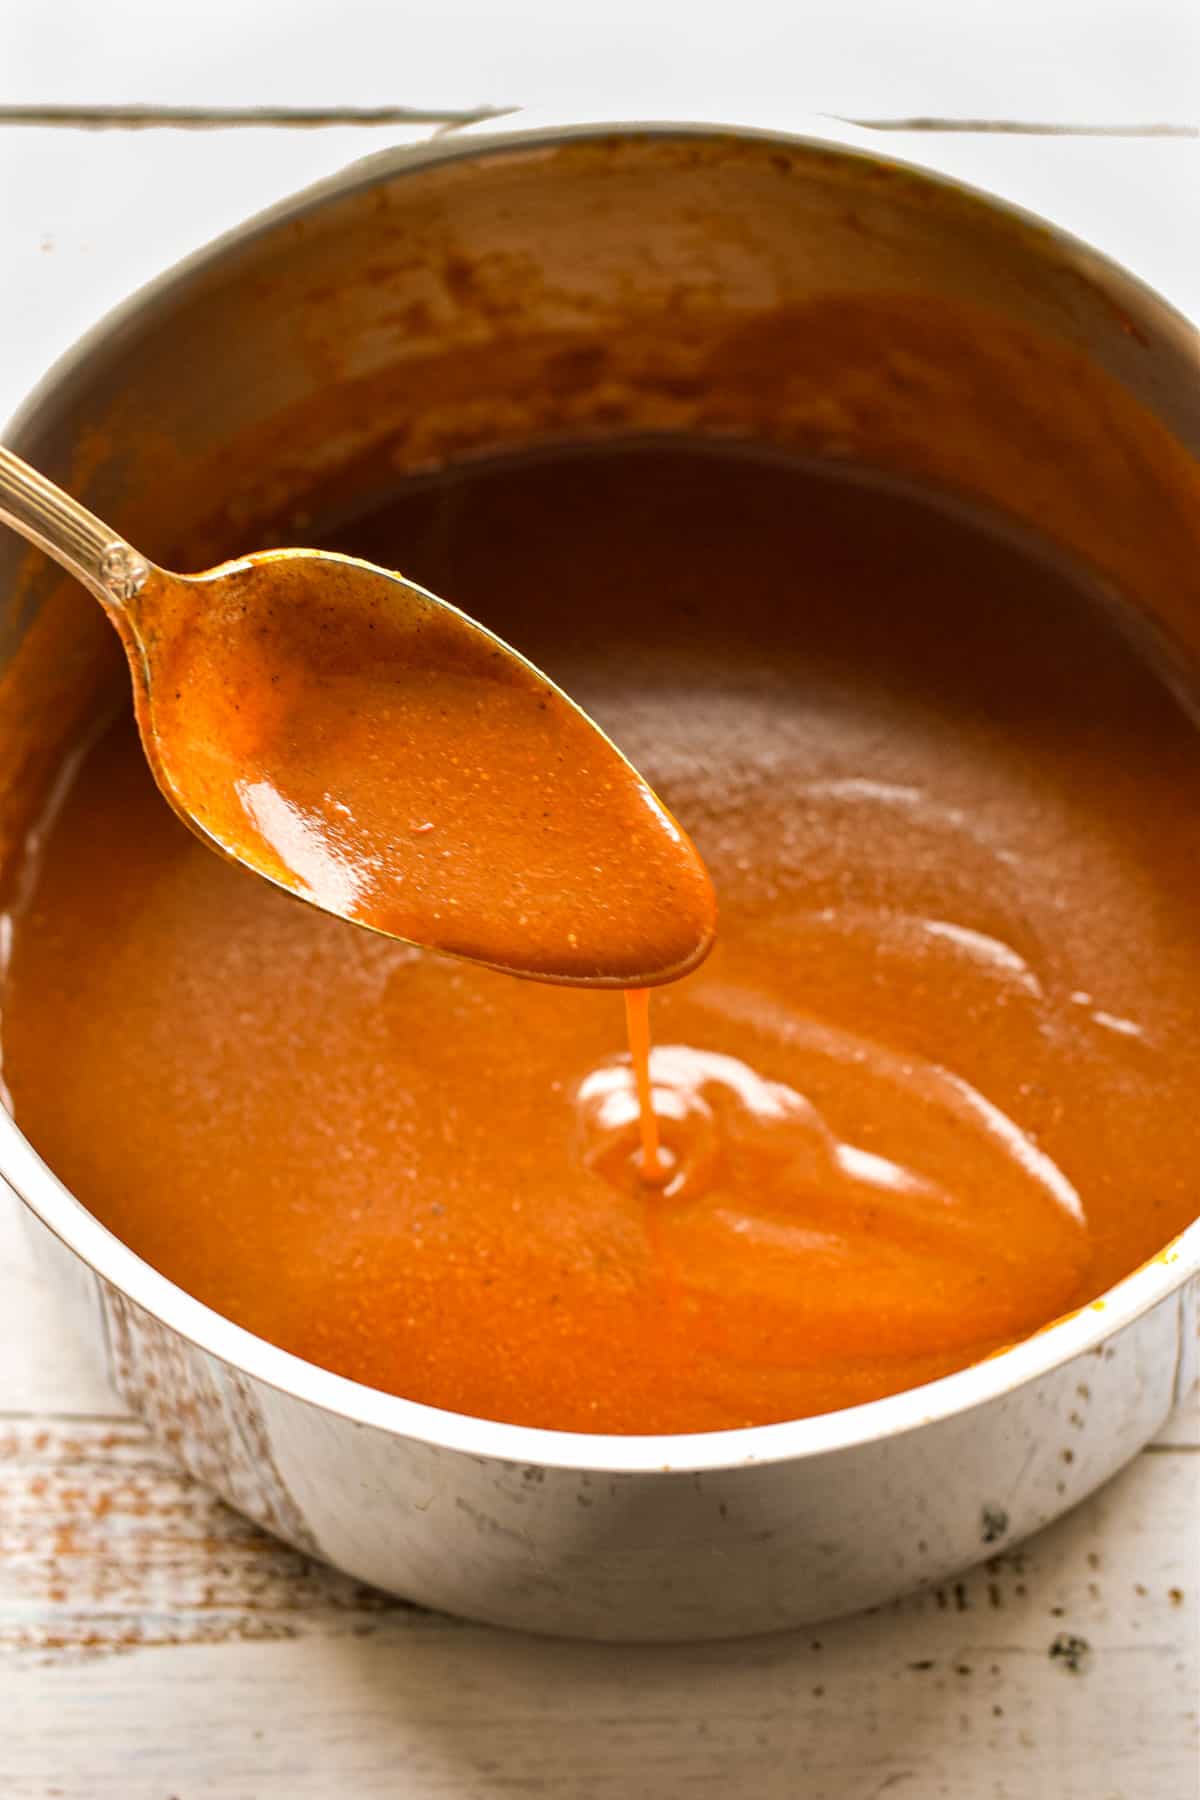 a spoon dripping low fodmap enchilada sauce into a saucepan